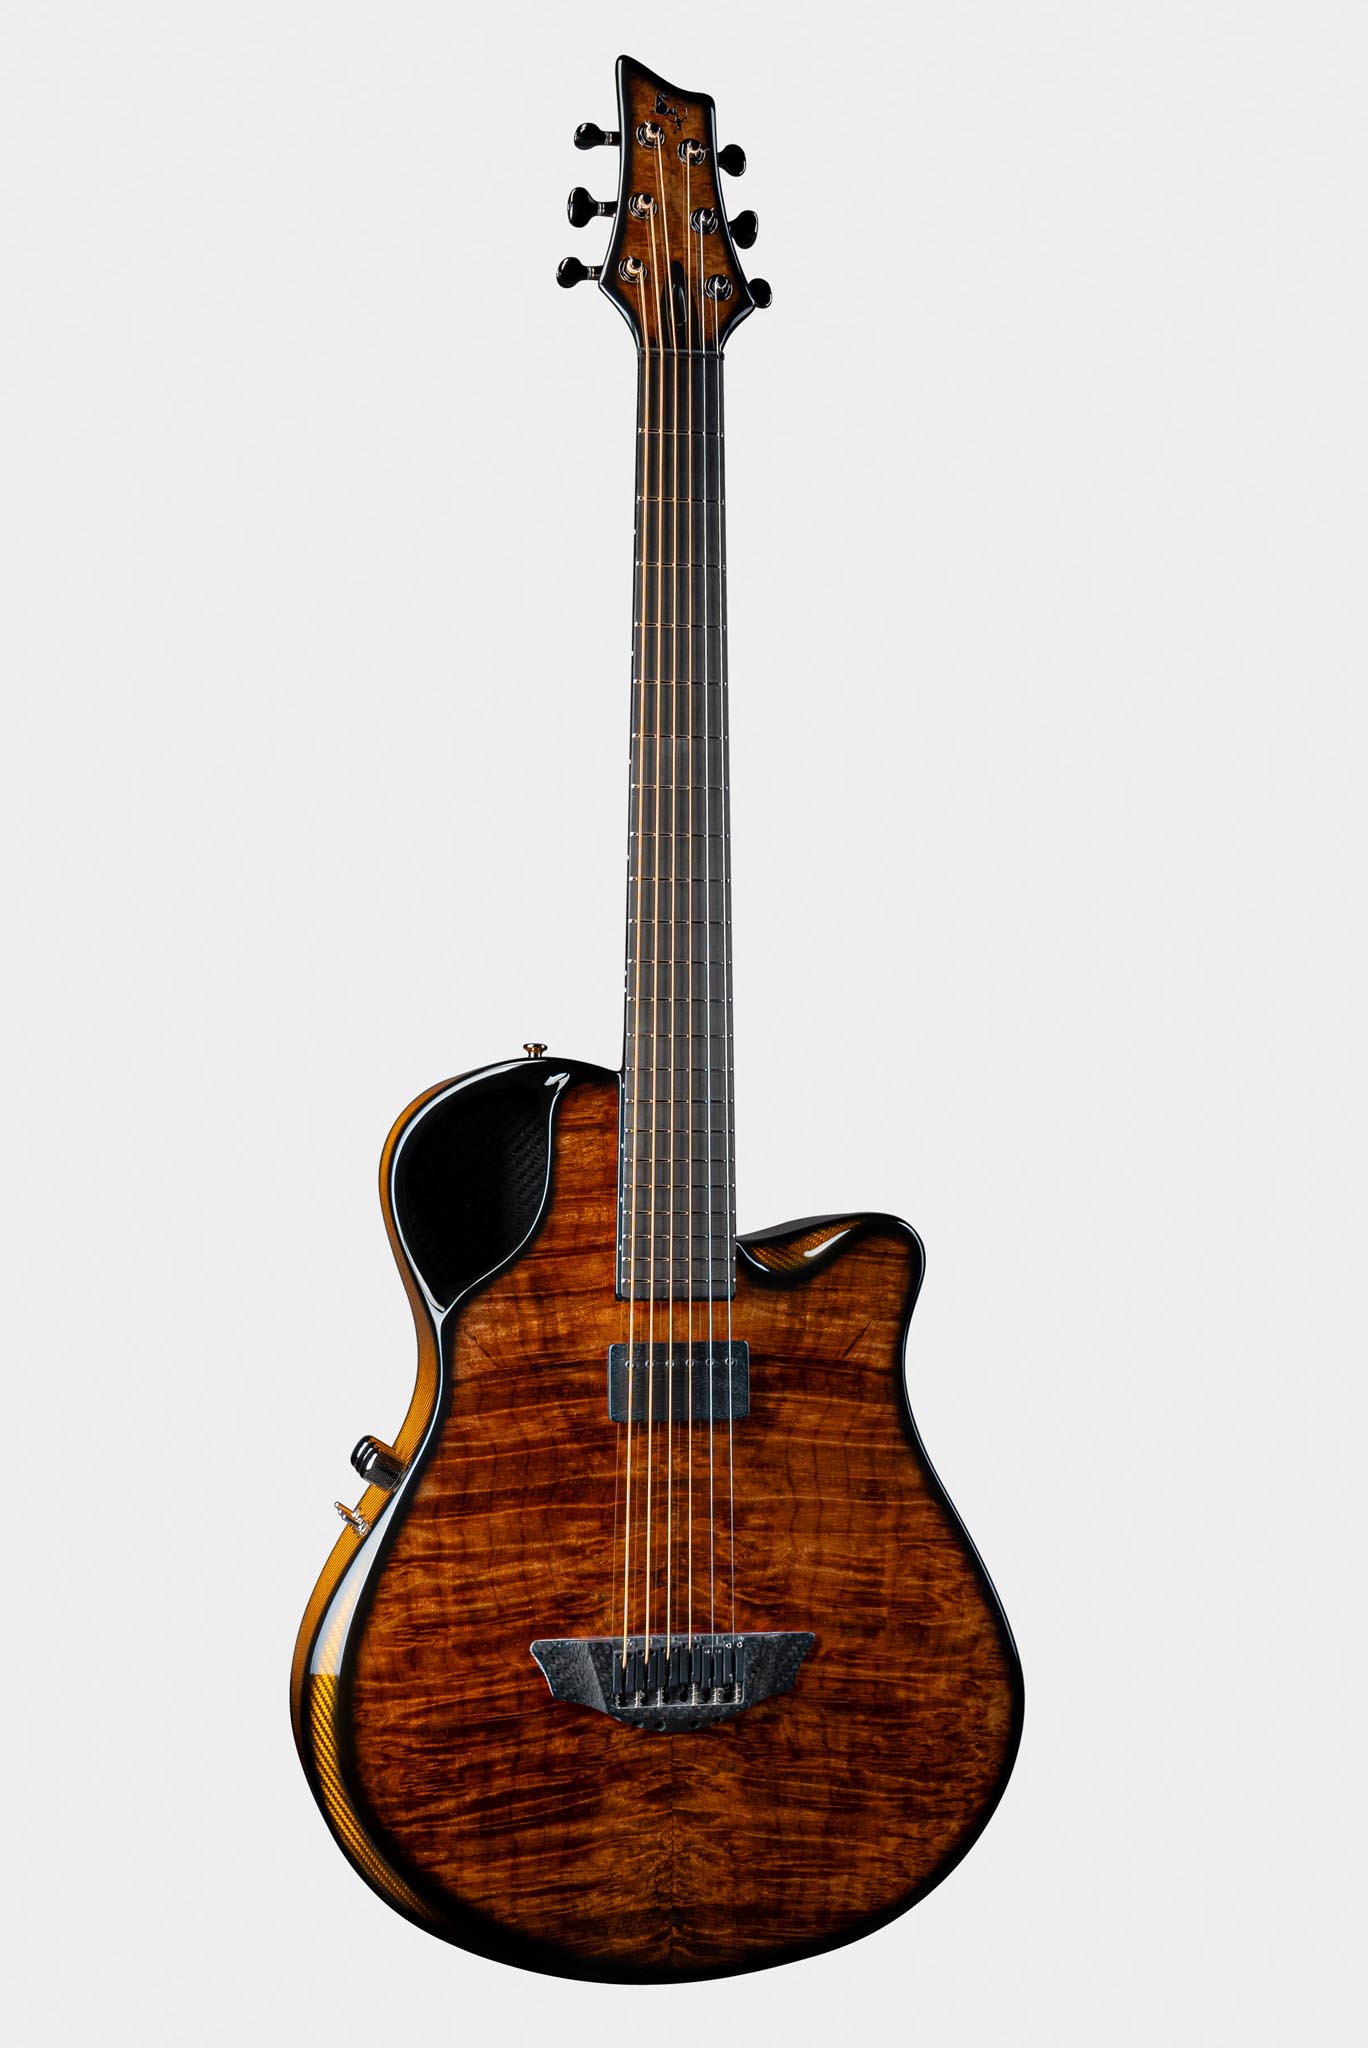 Redwood Burl Emerald Guitars X10 model